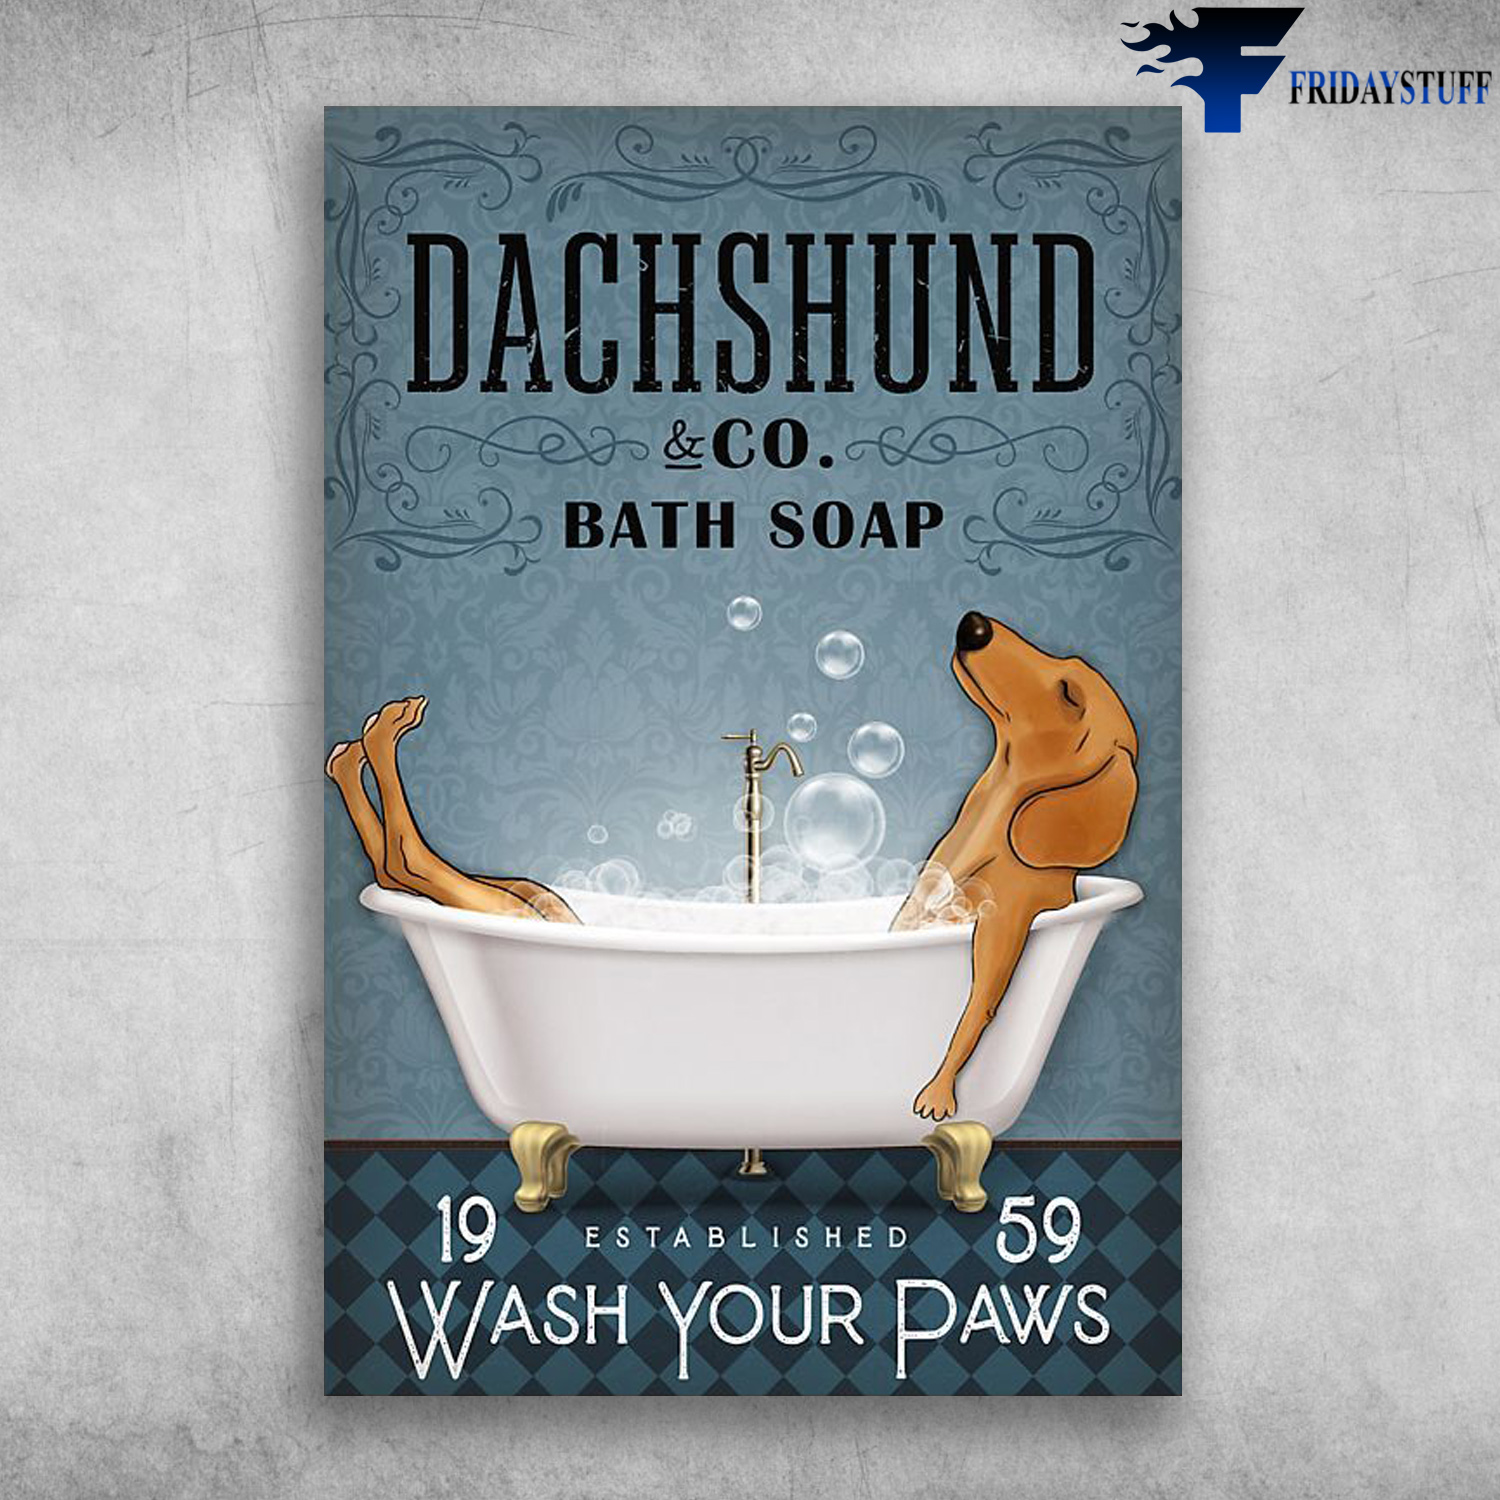 Dachshund In The Bath - Dachshund And CO. Bath Soap, 19 Established 59, Whash Your Paws